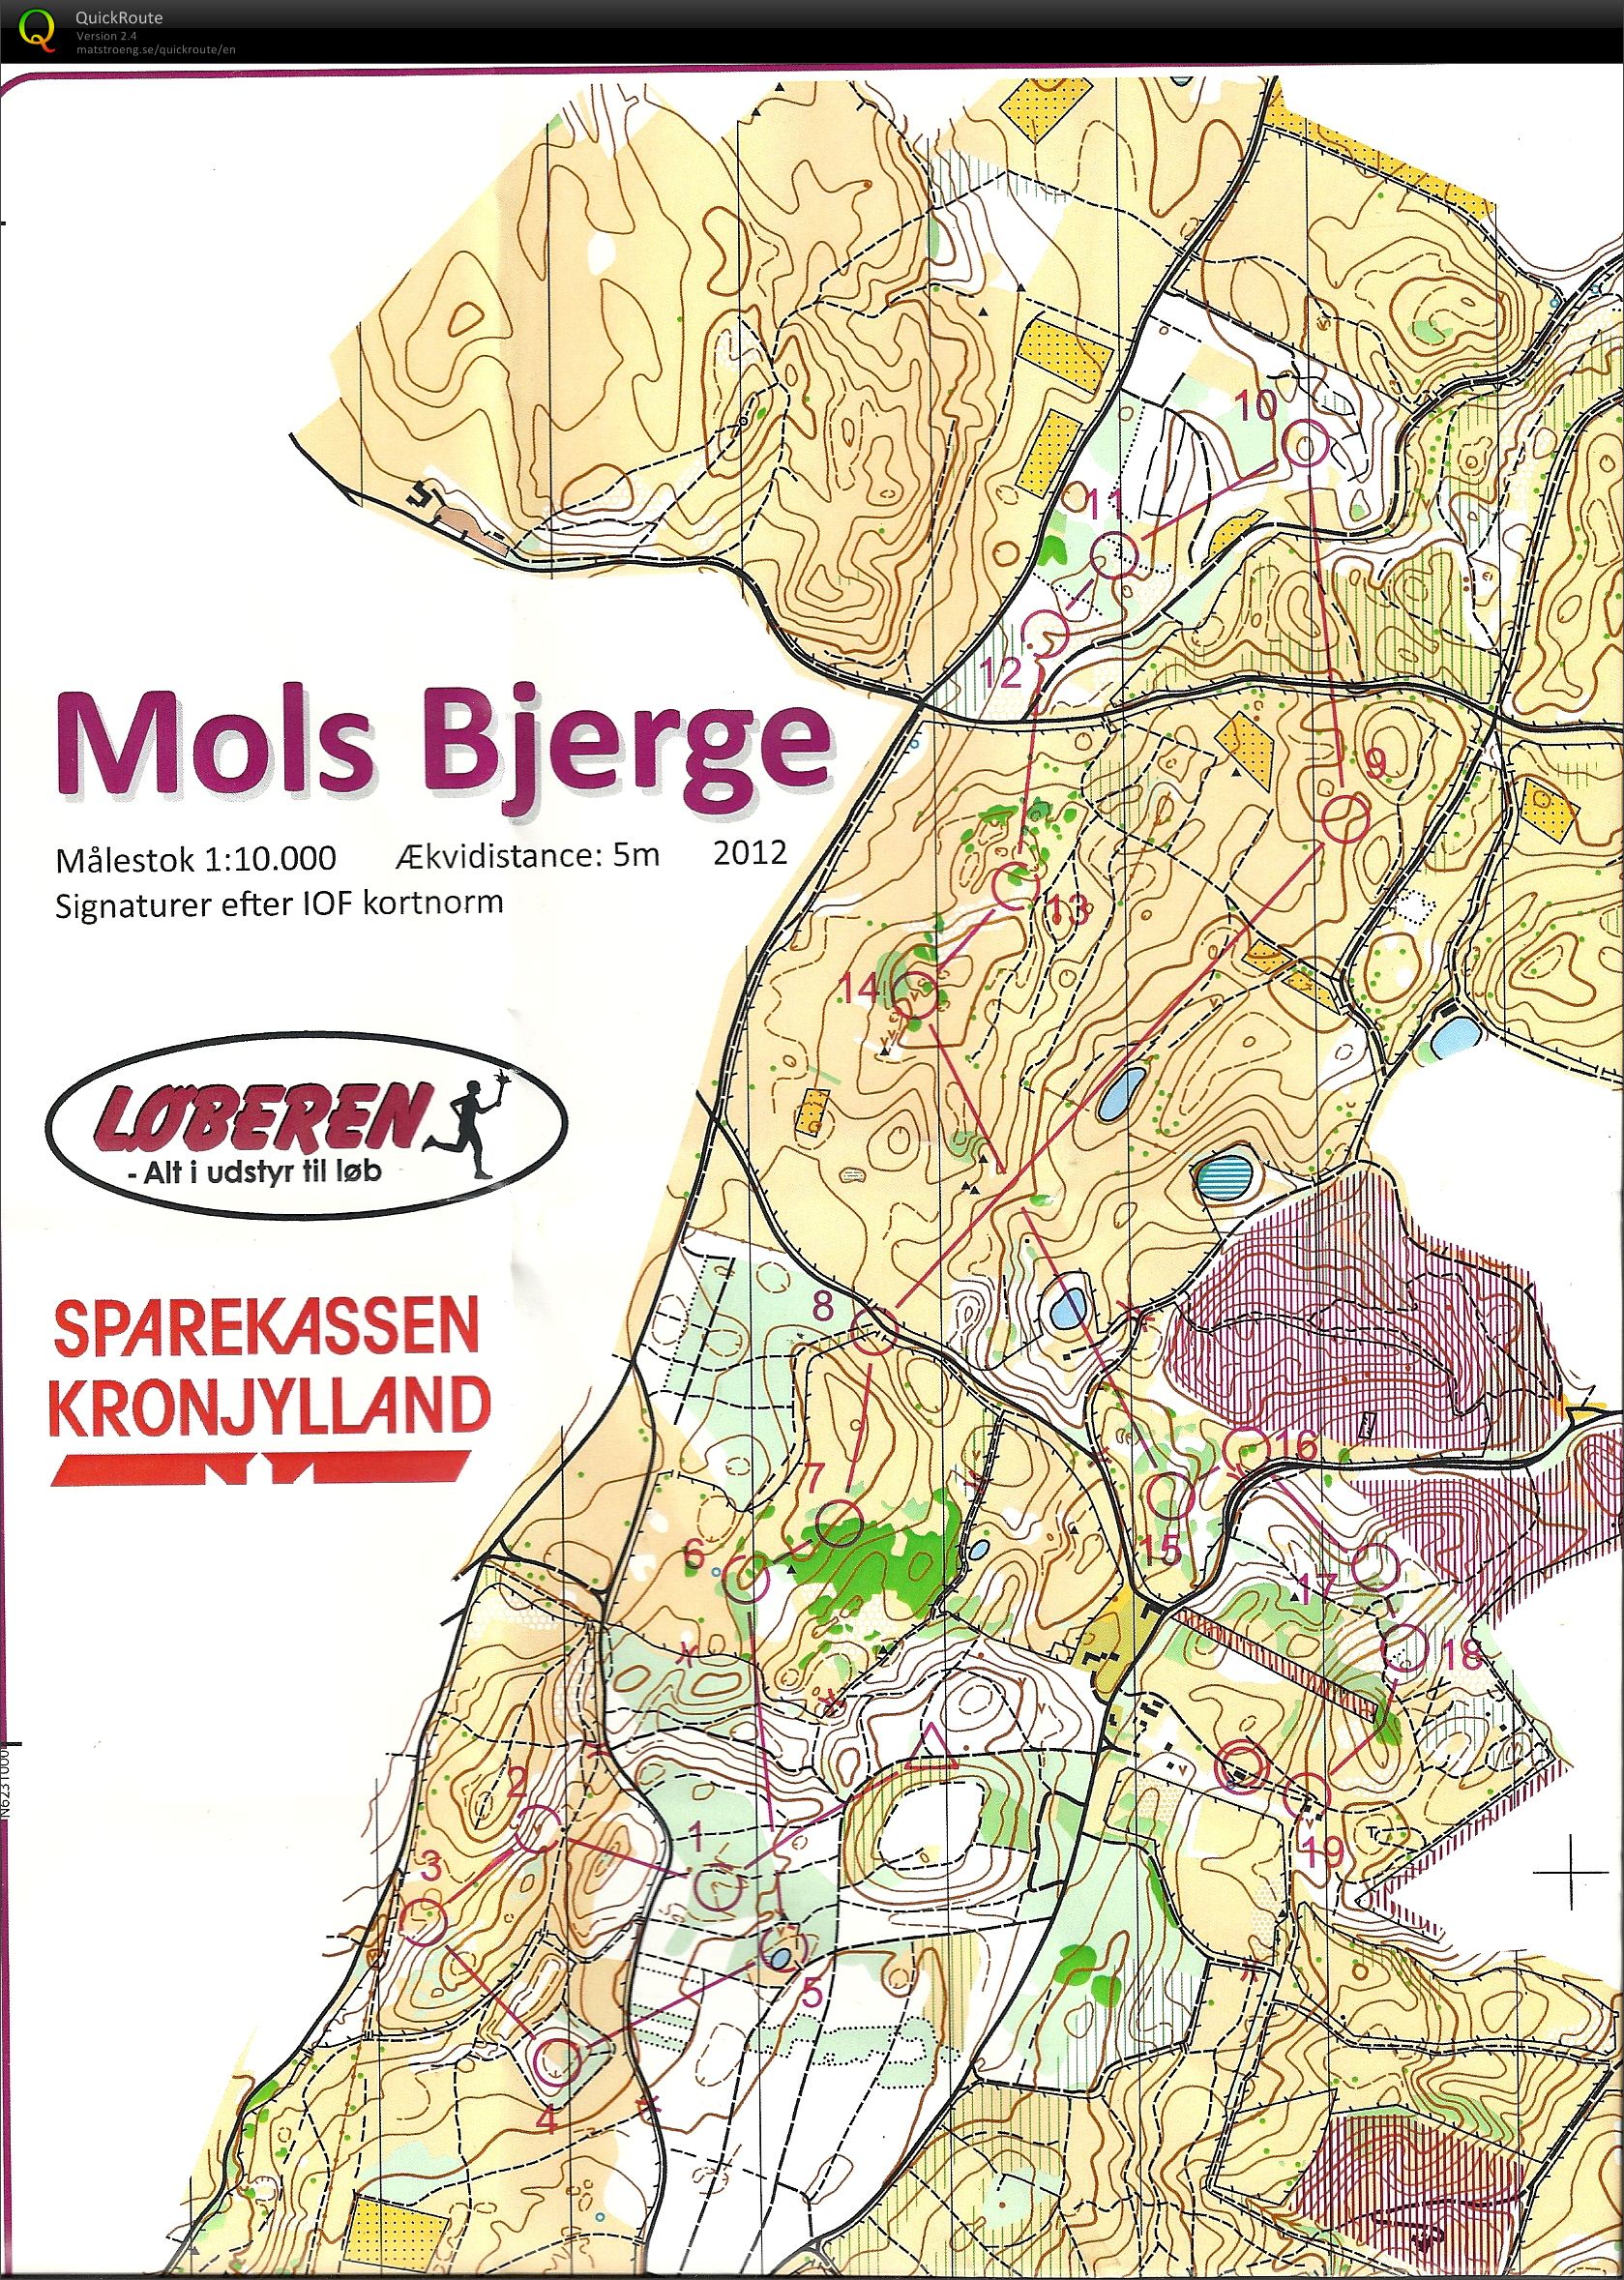 Mols Bjerge, JFM Lang, D45, LeneSN (19.08.2012)